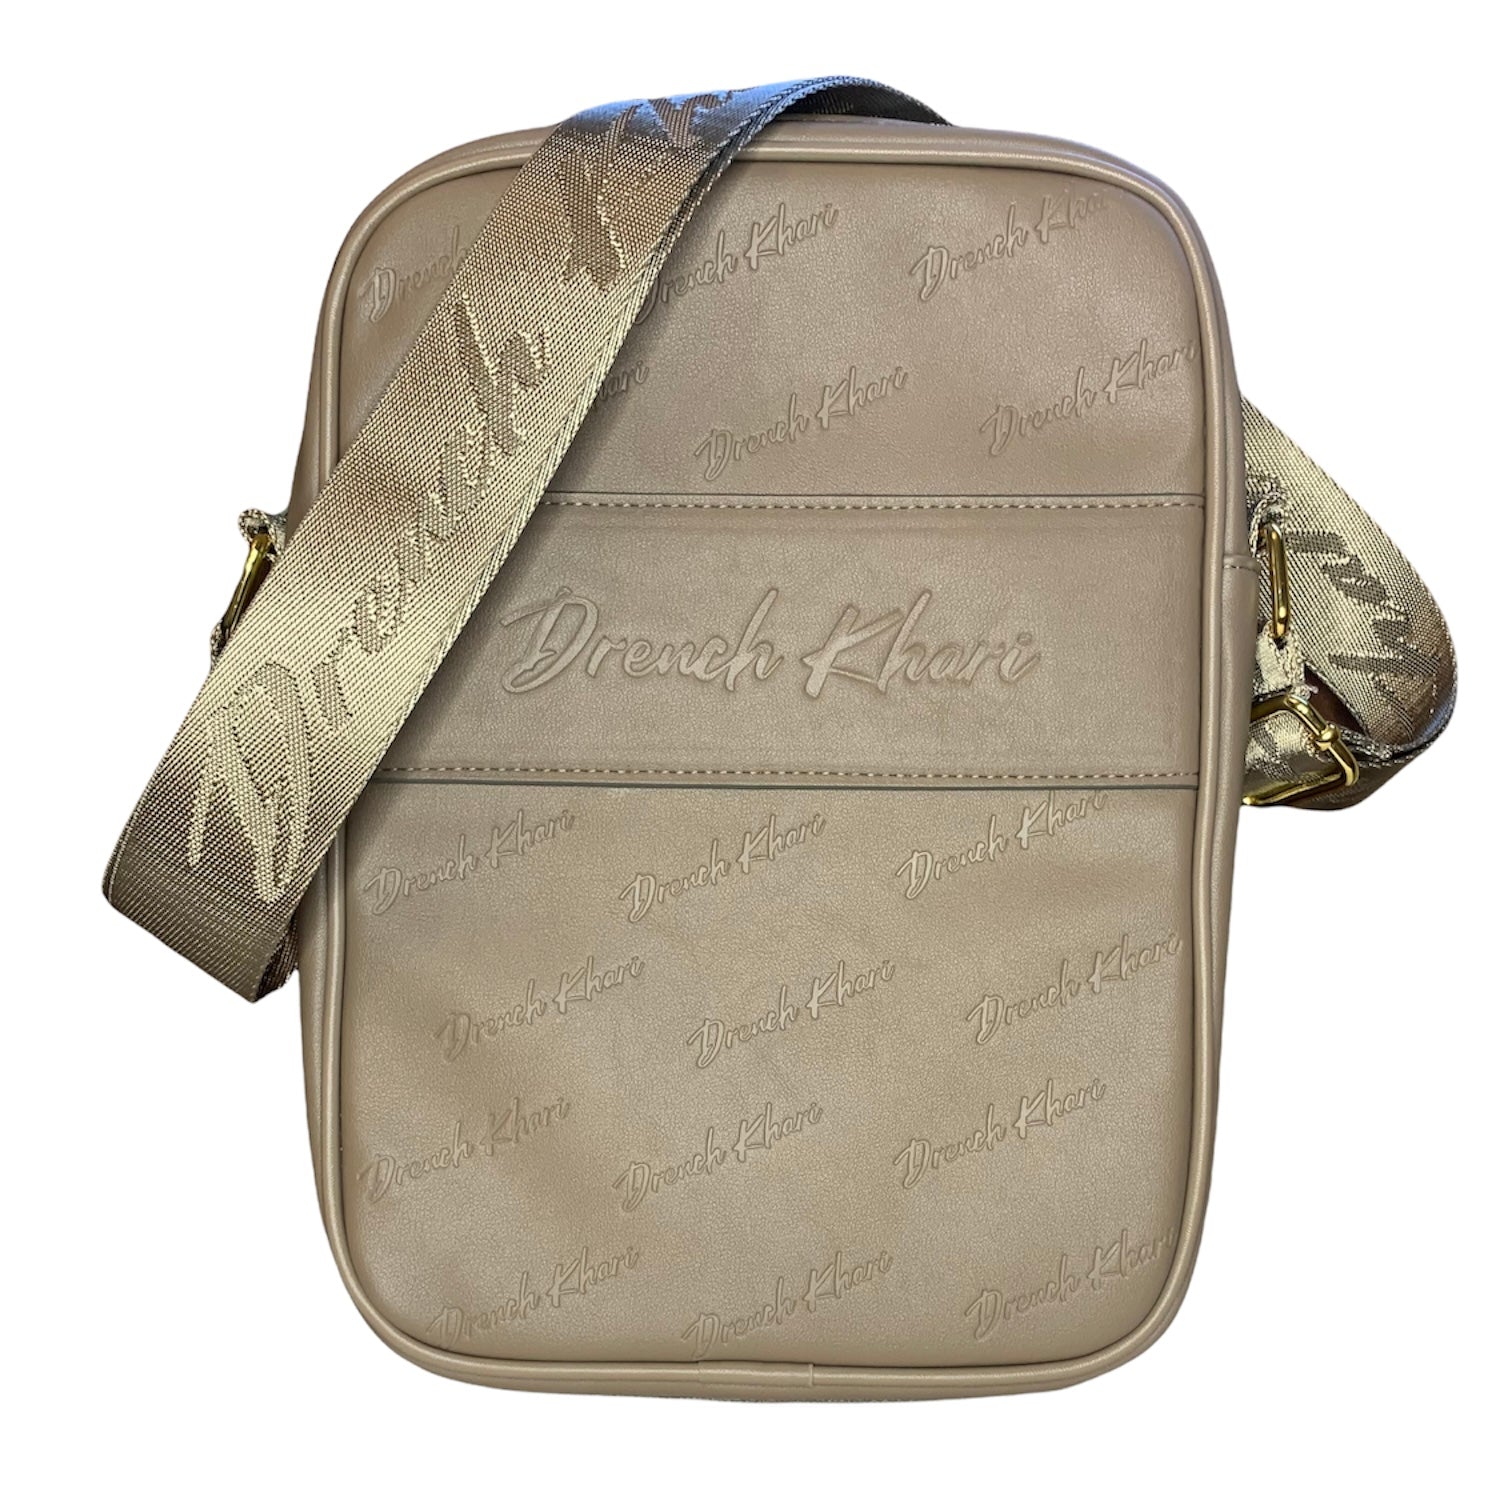 Moyen Taupe Leather Messenger Bag